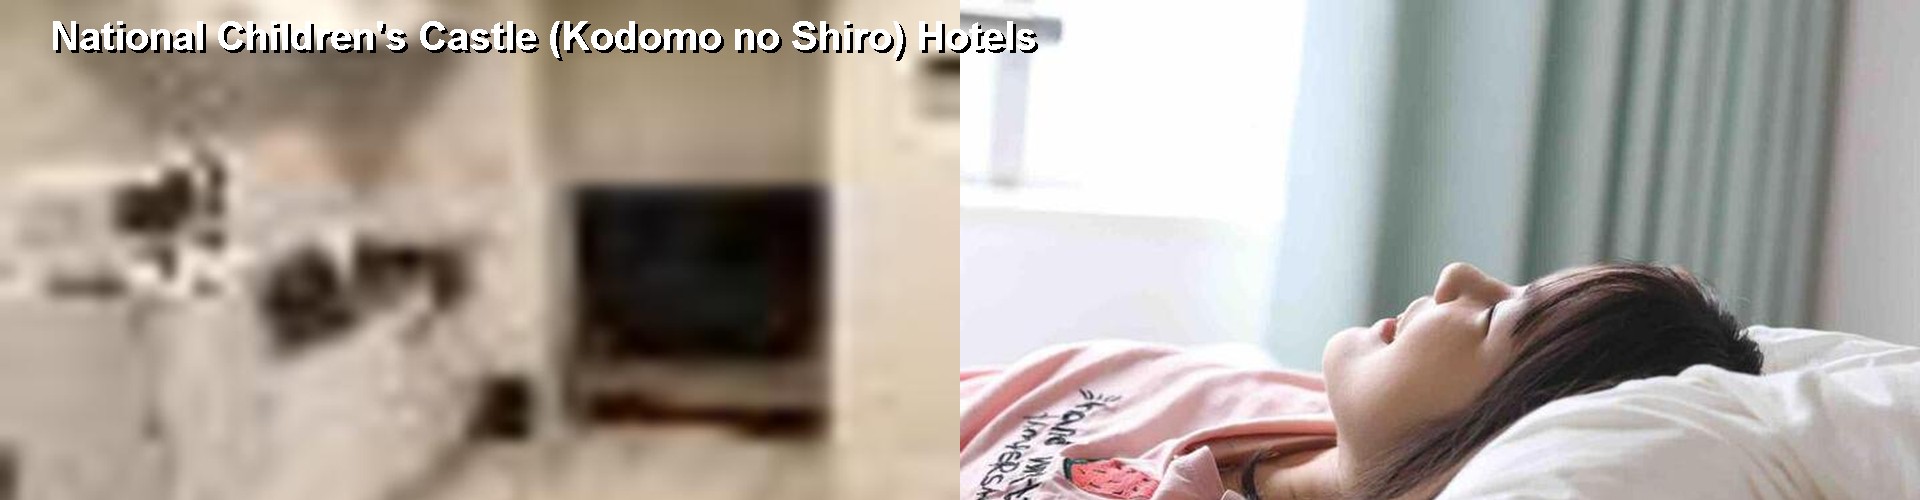 5 Best Hotels near National Children's Castle (Kodomo no Shiro)